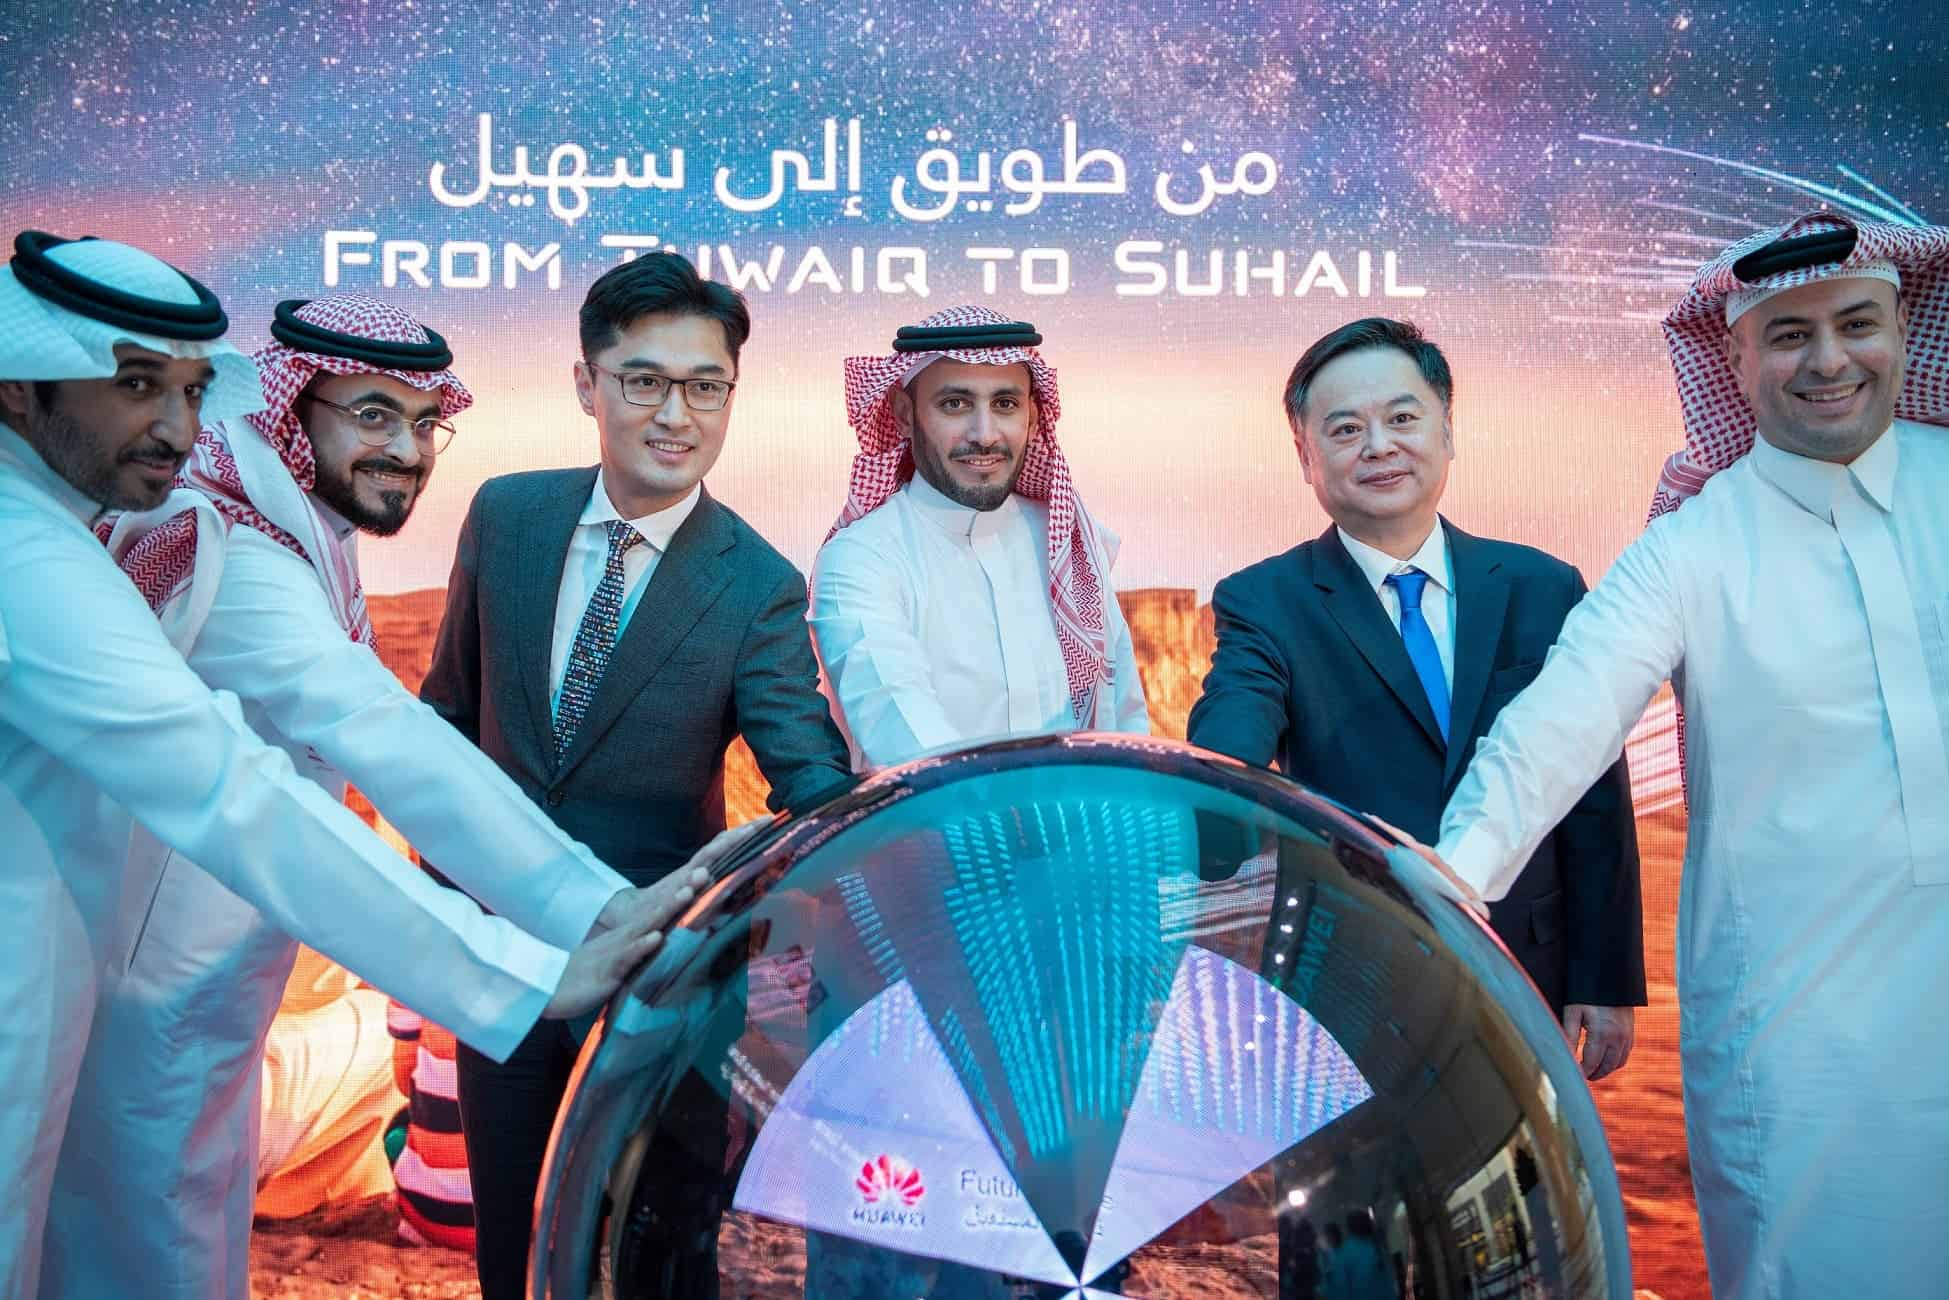 Future Space will be established by Huawei in Saudi Arabia